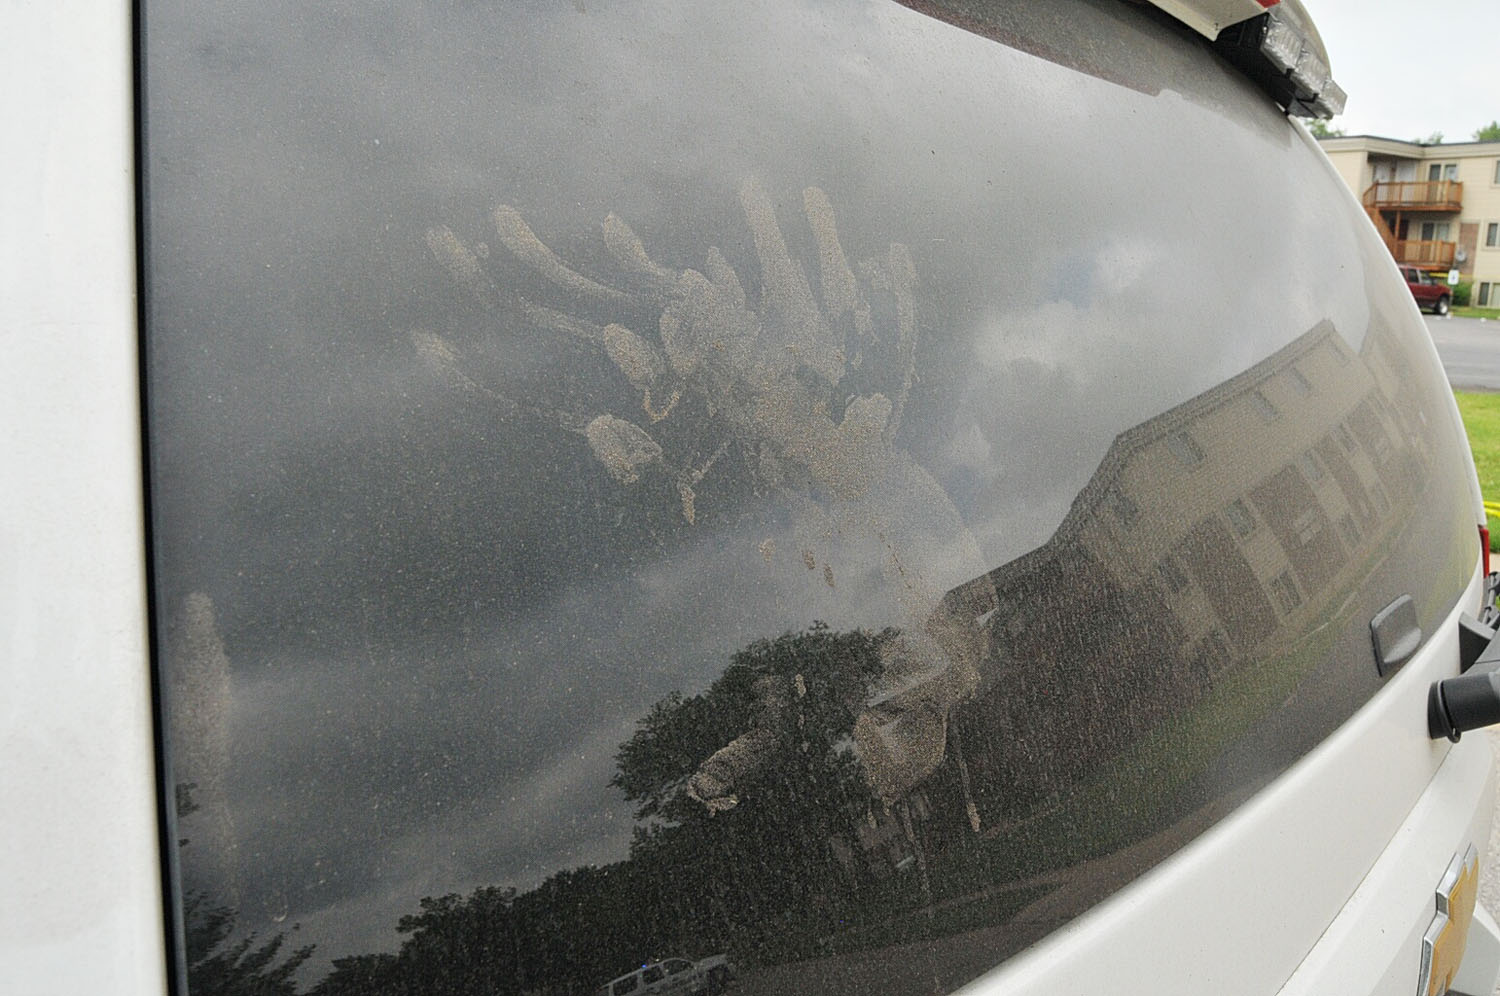 Handprints mark the rear window of Wilson's vehicle.